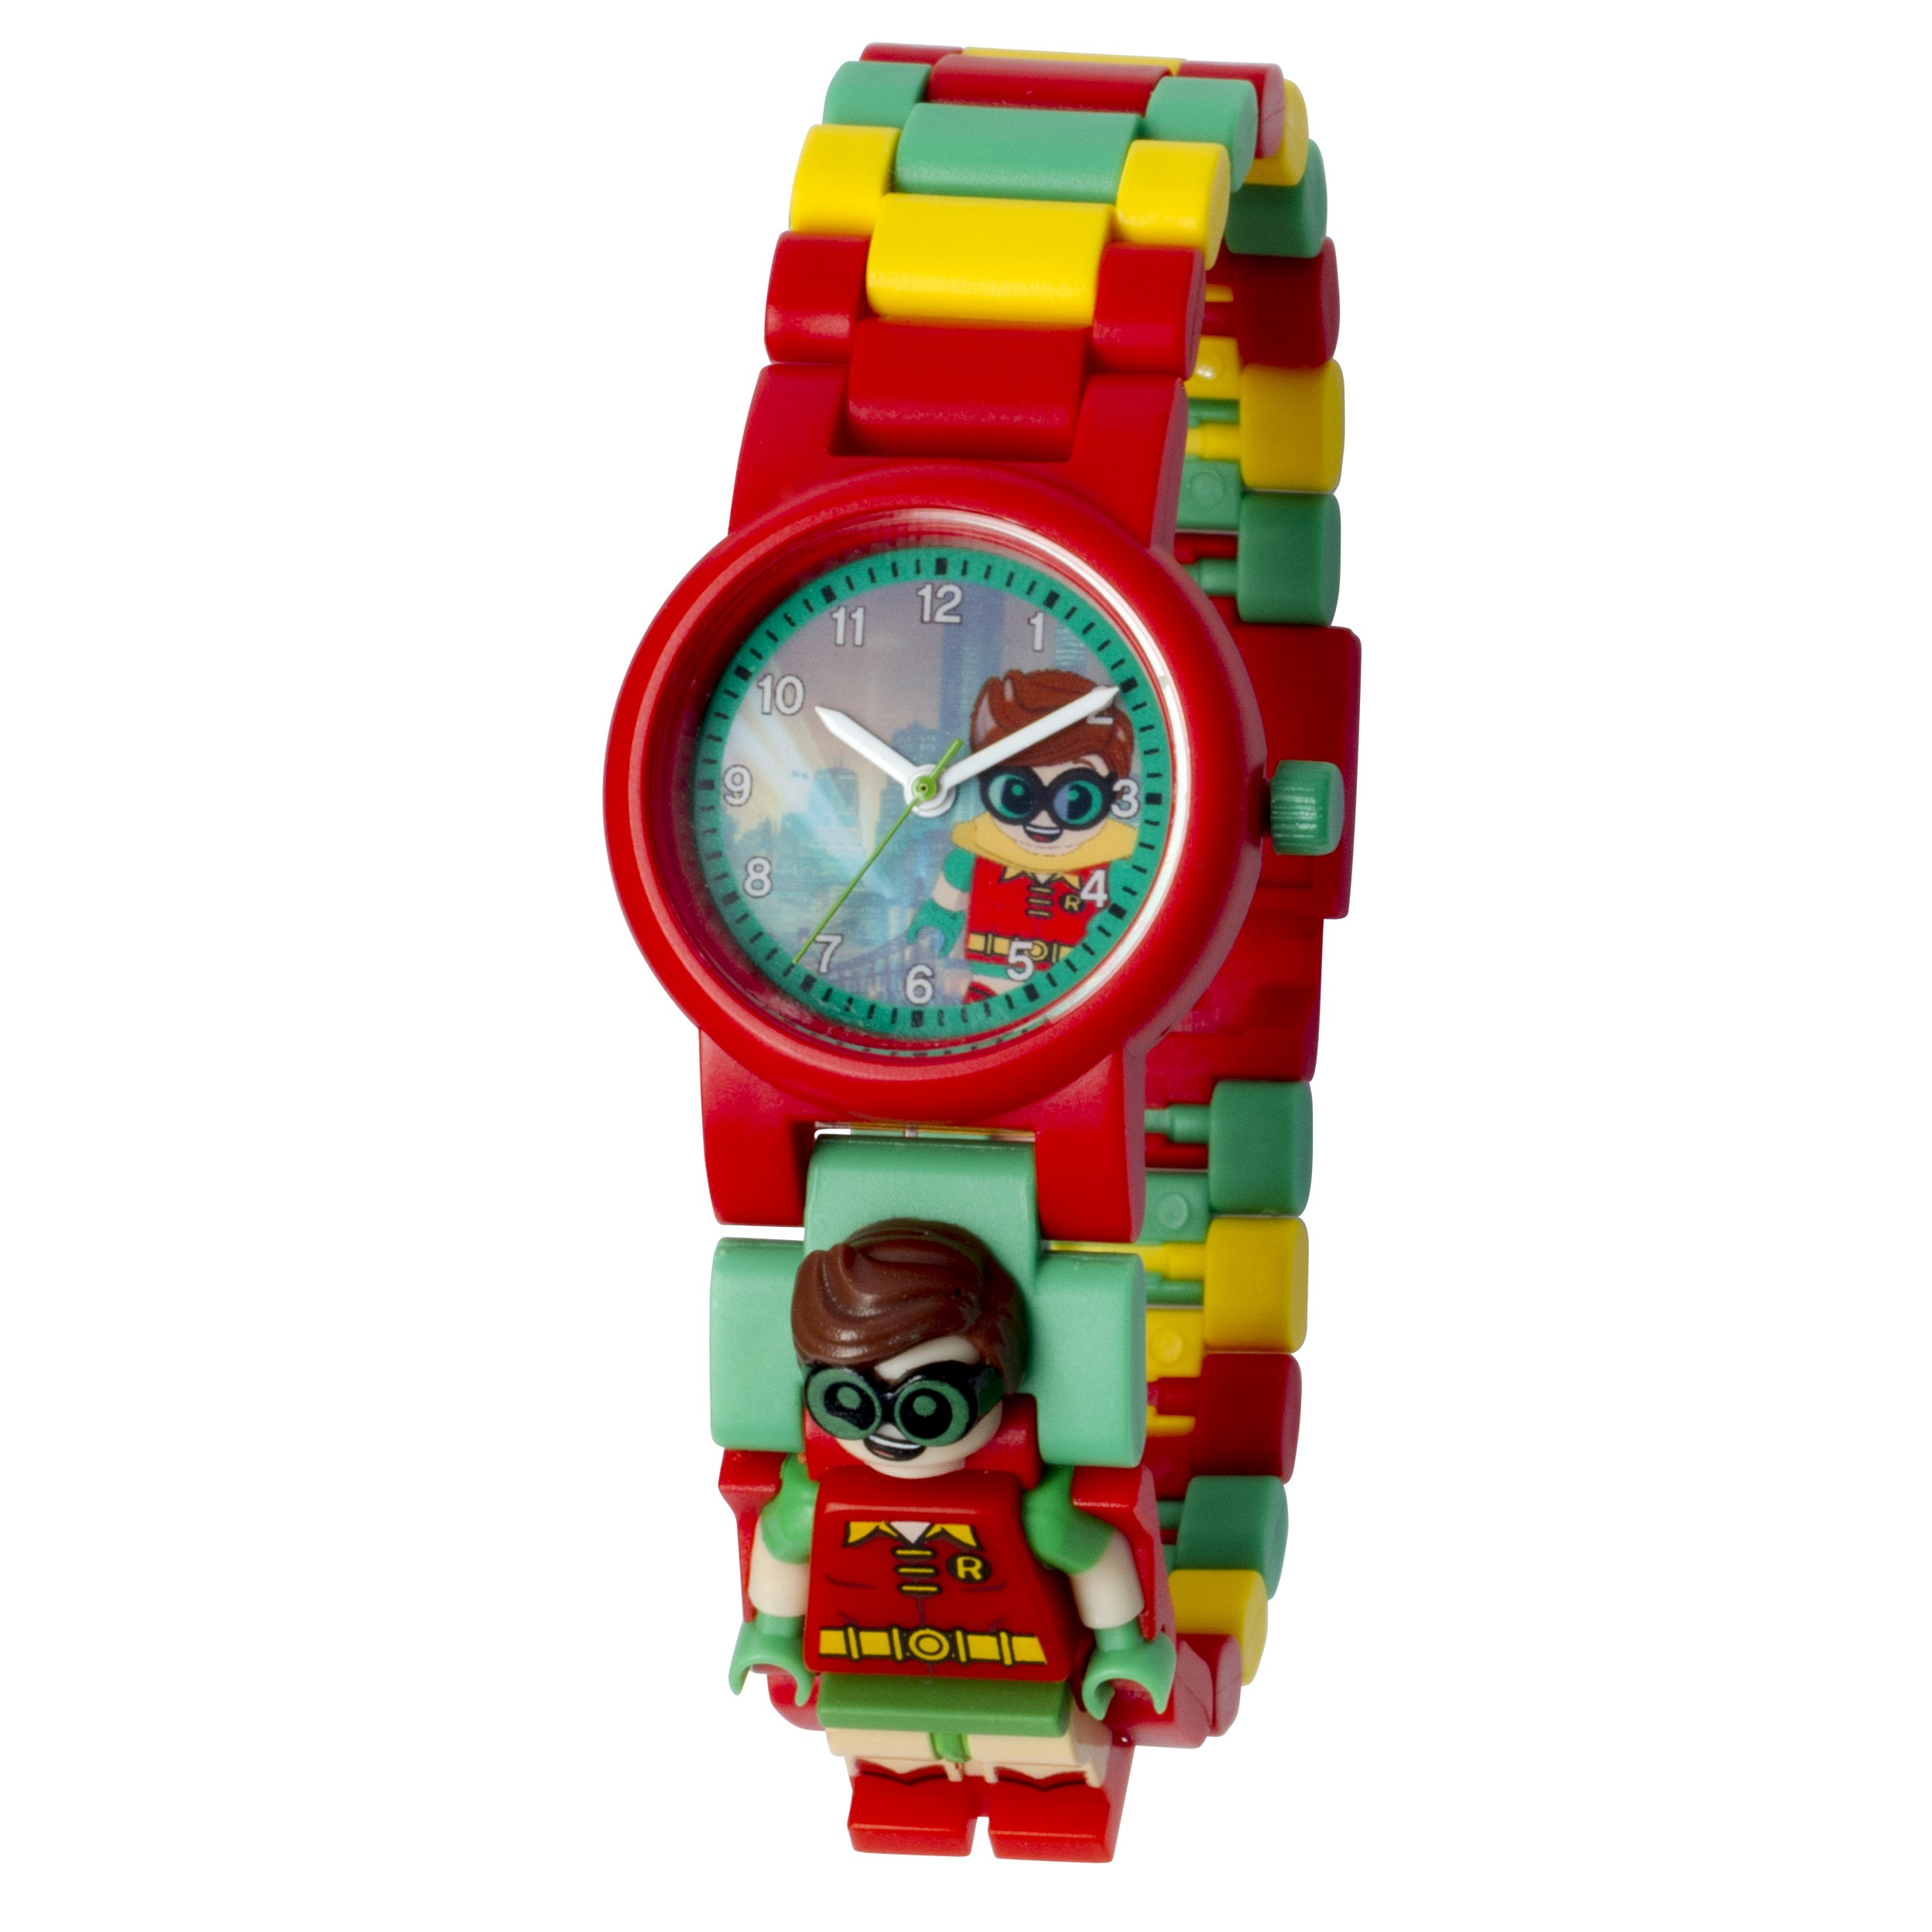 LEGO Batman Movie Robin Minifigure Link Watch Only $7.87!